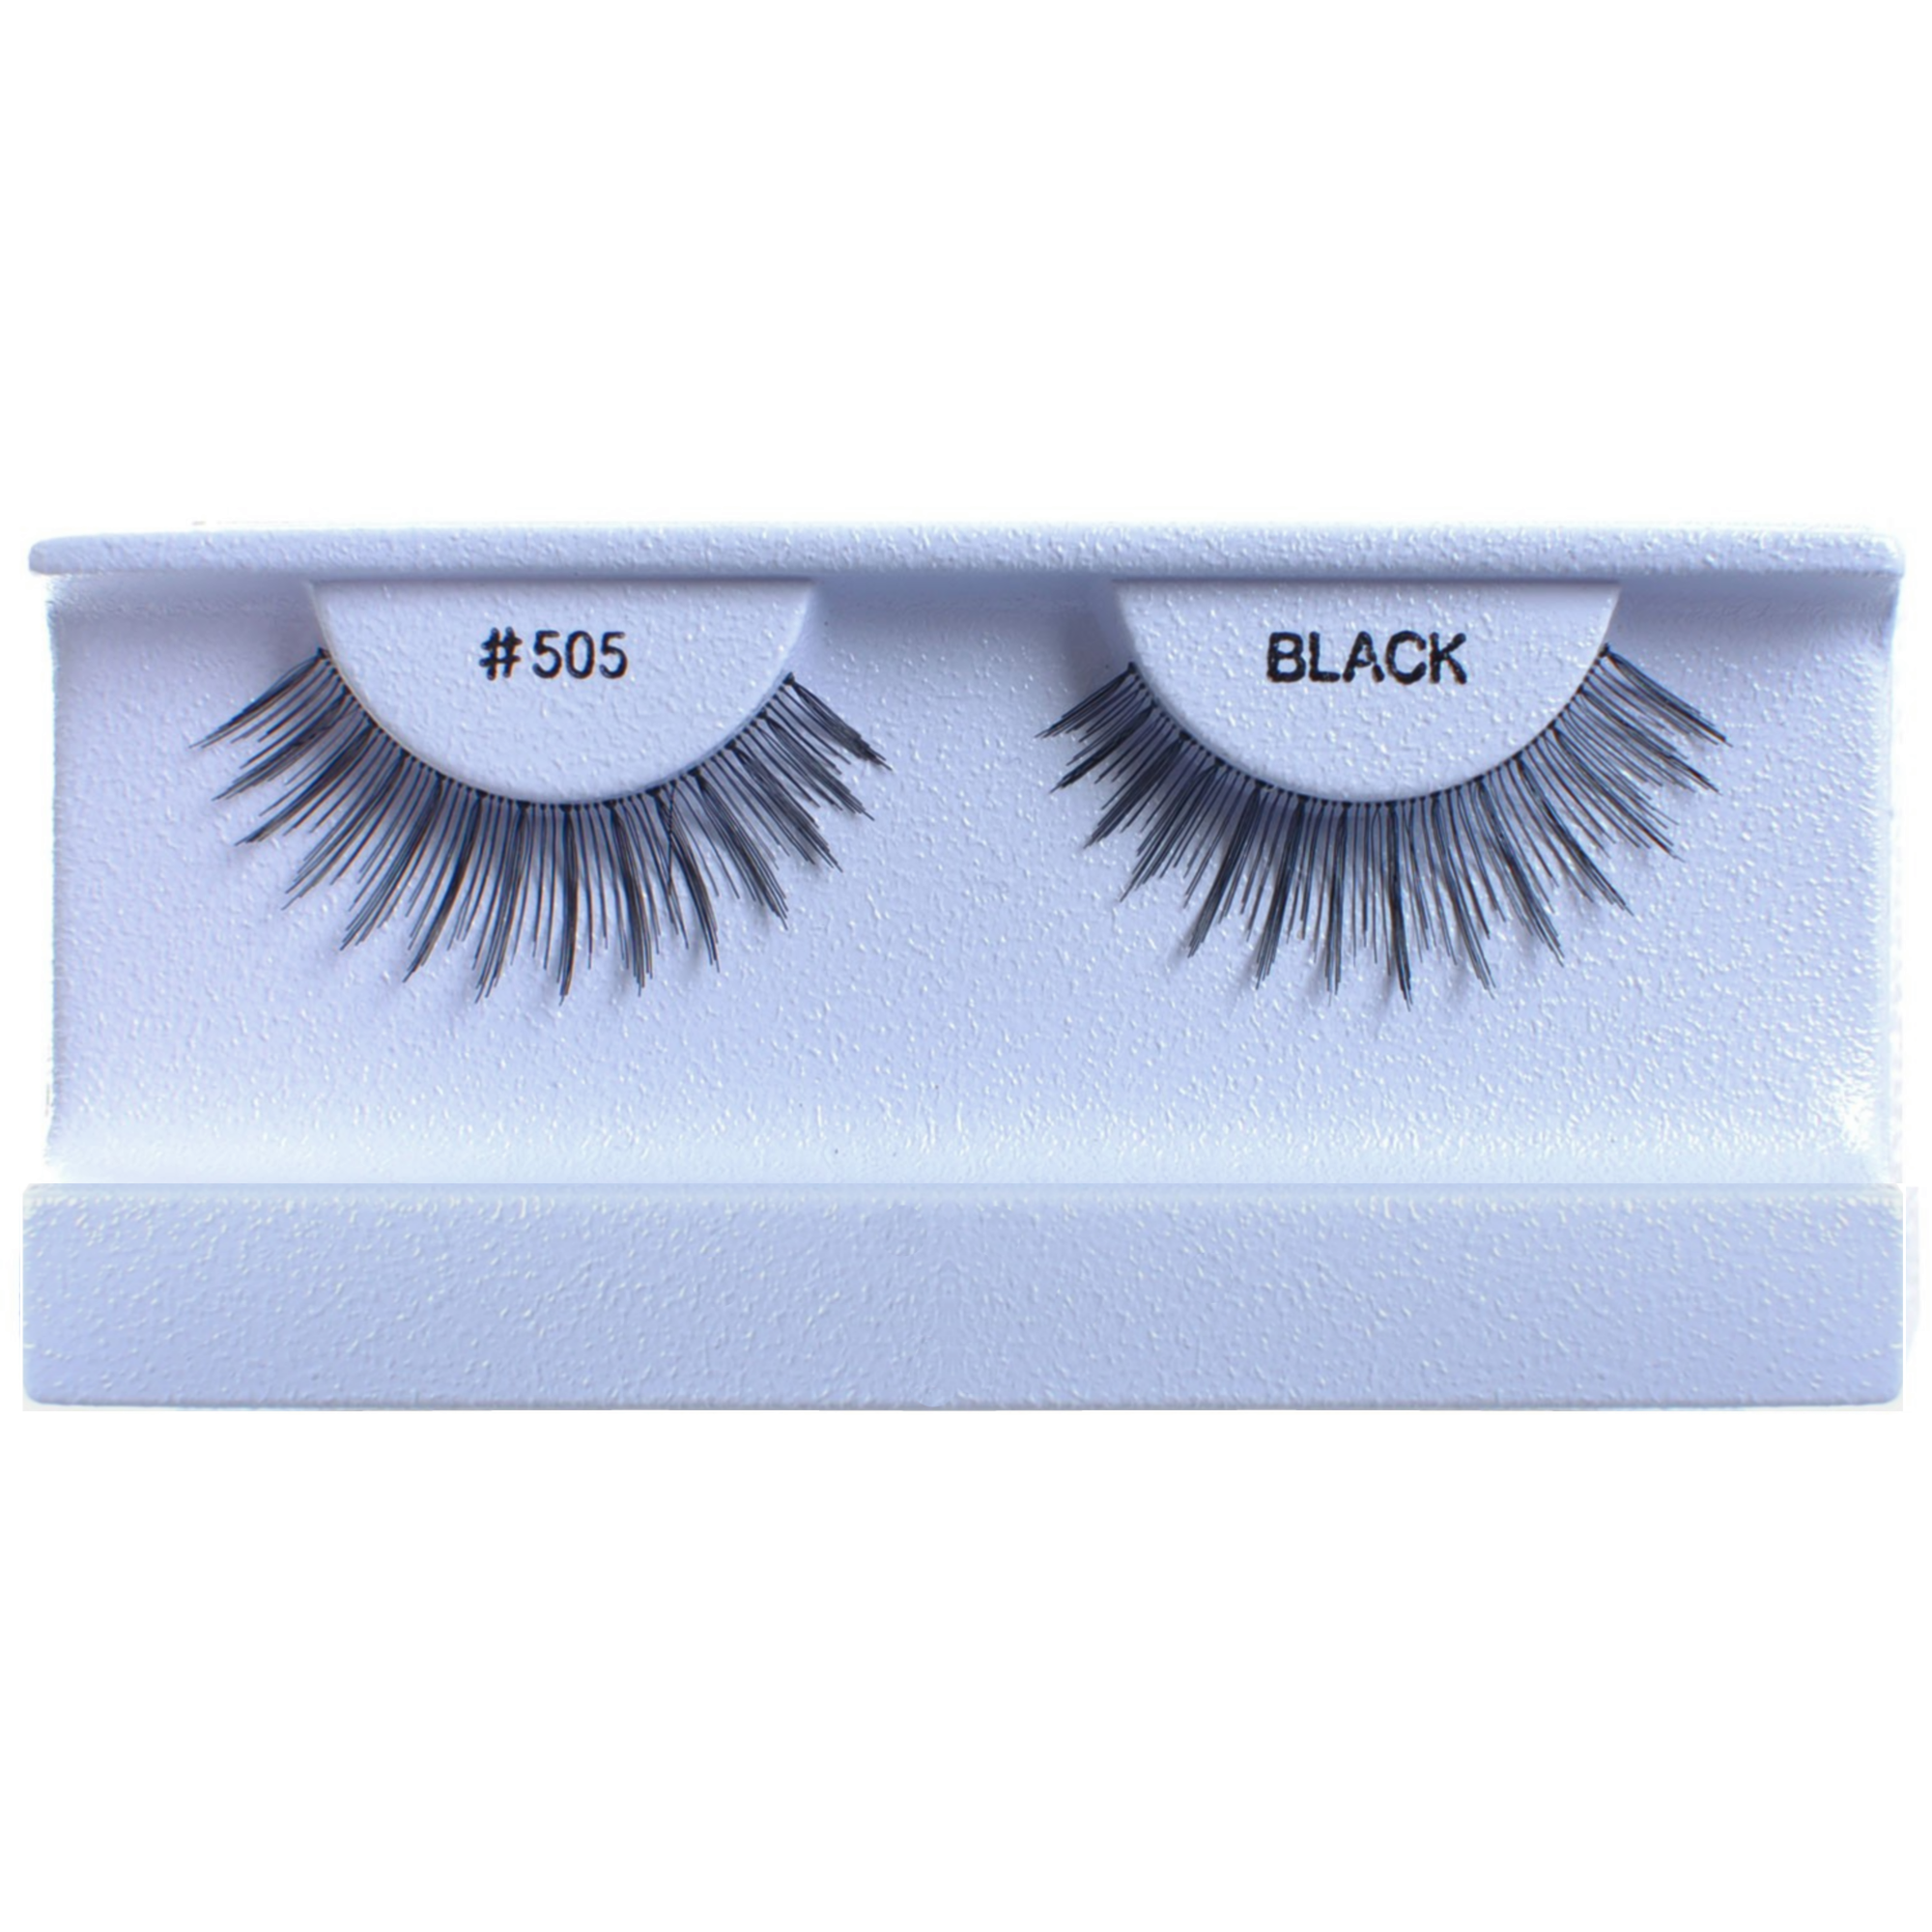 Eyelashes 505 - colornoir